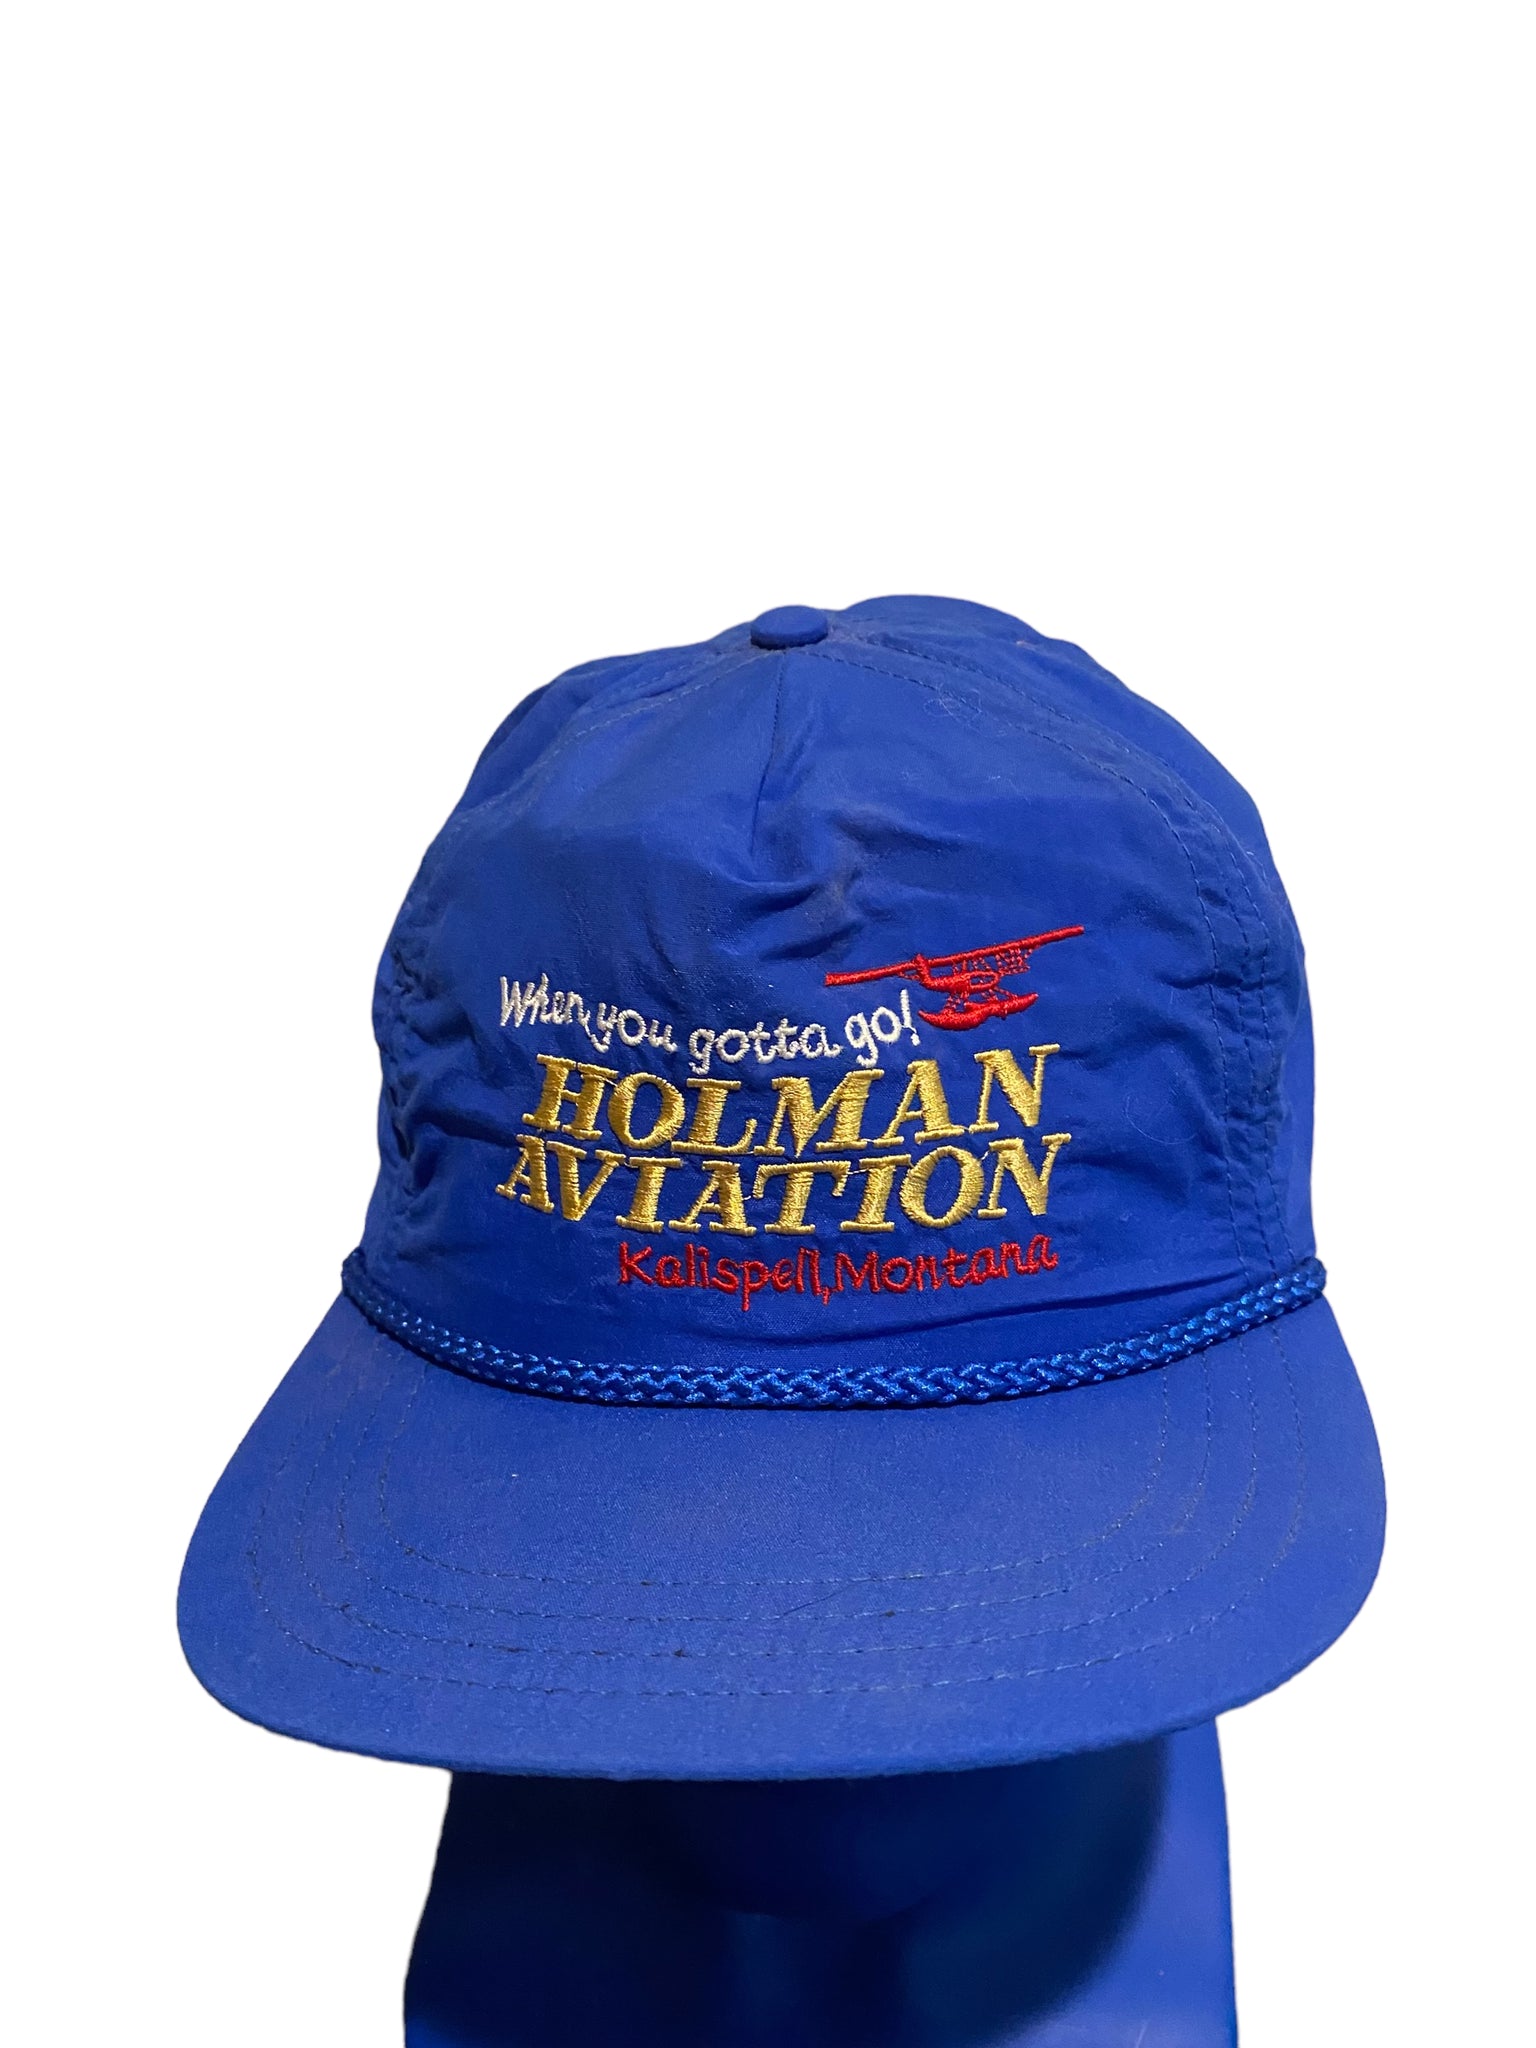 Vintage when you gotta go holman aviation kalispell, Mt rope hat Leather Strap